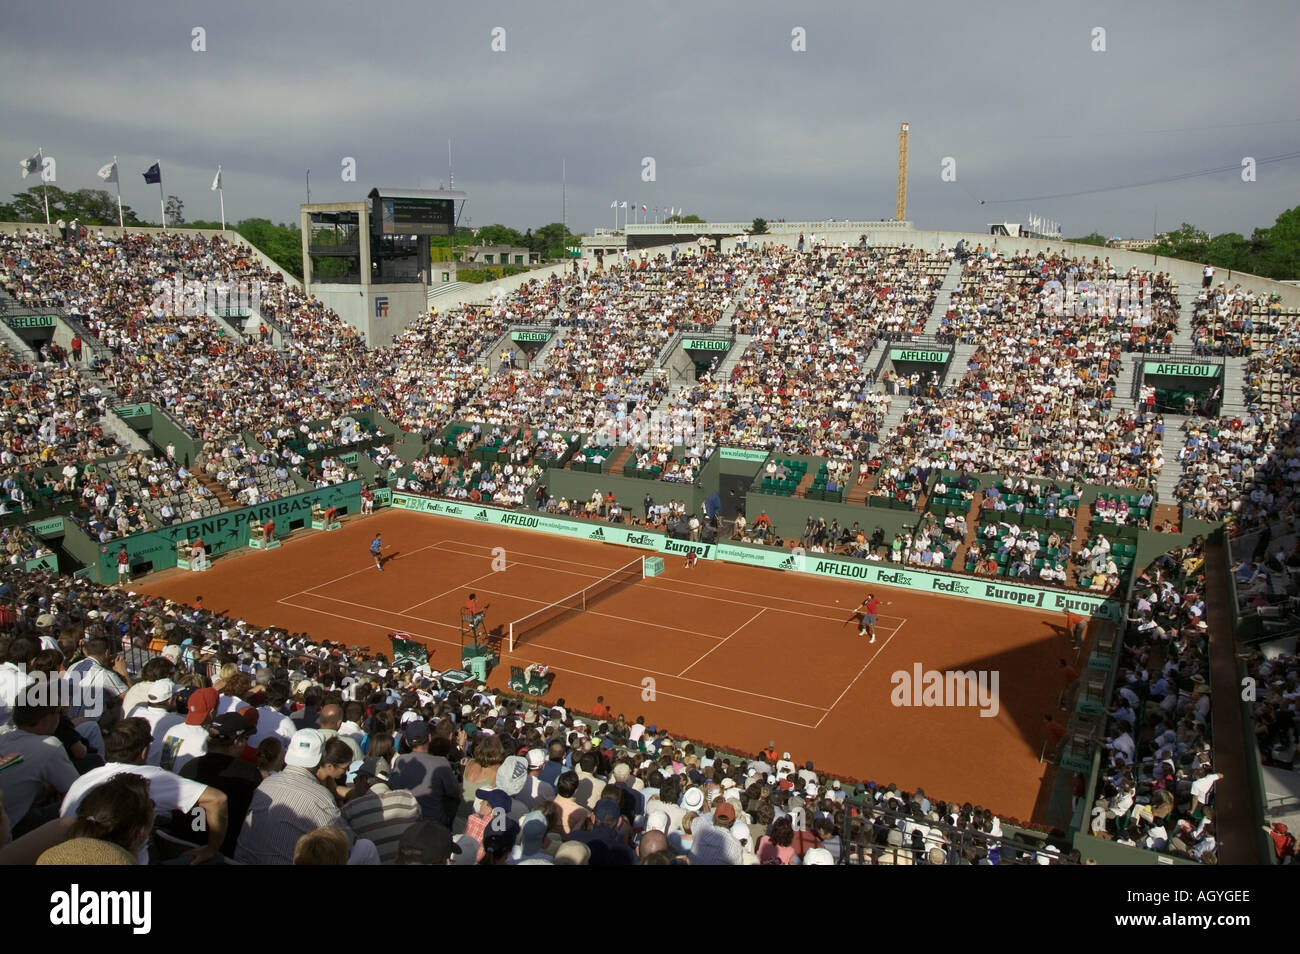 France Paris Tennis Roland Garros tournament on Suzanne Lenglen court Stock  Photo - Alamy